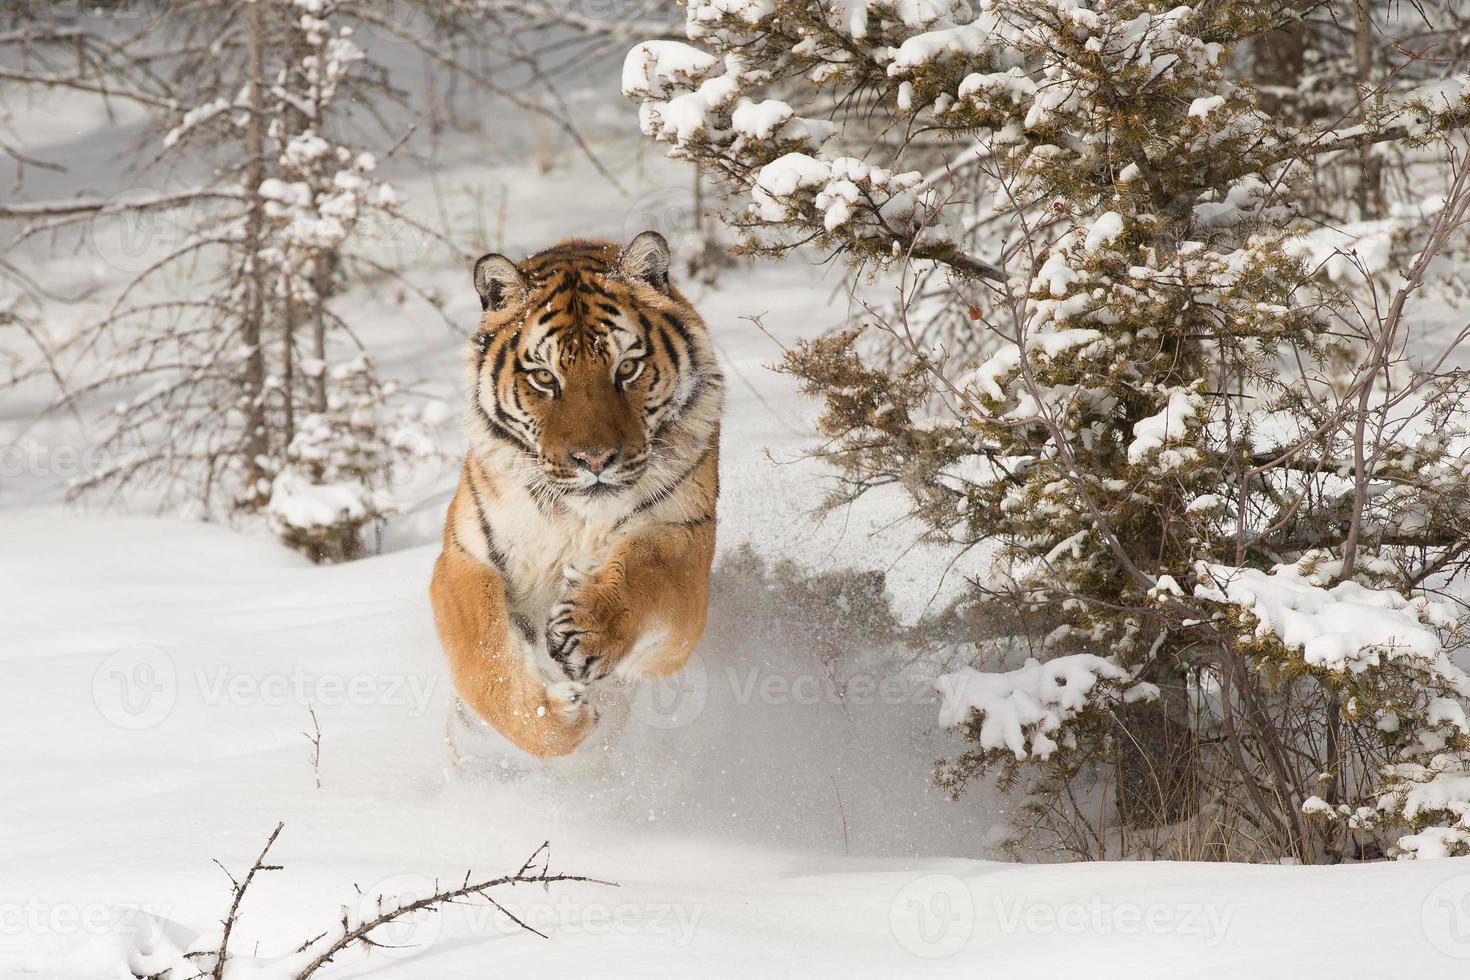 tigre siberiano adulto raro em cena de inverno nevado foto